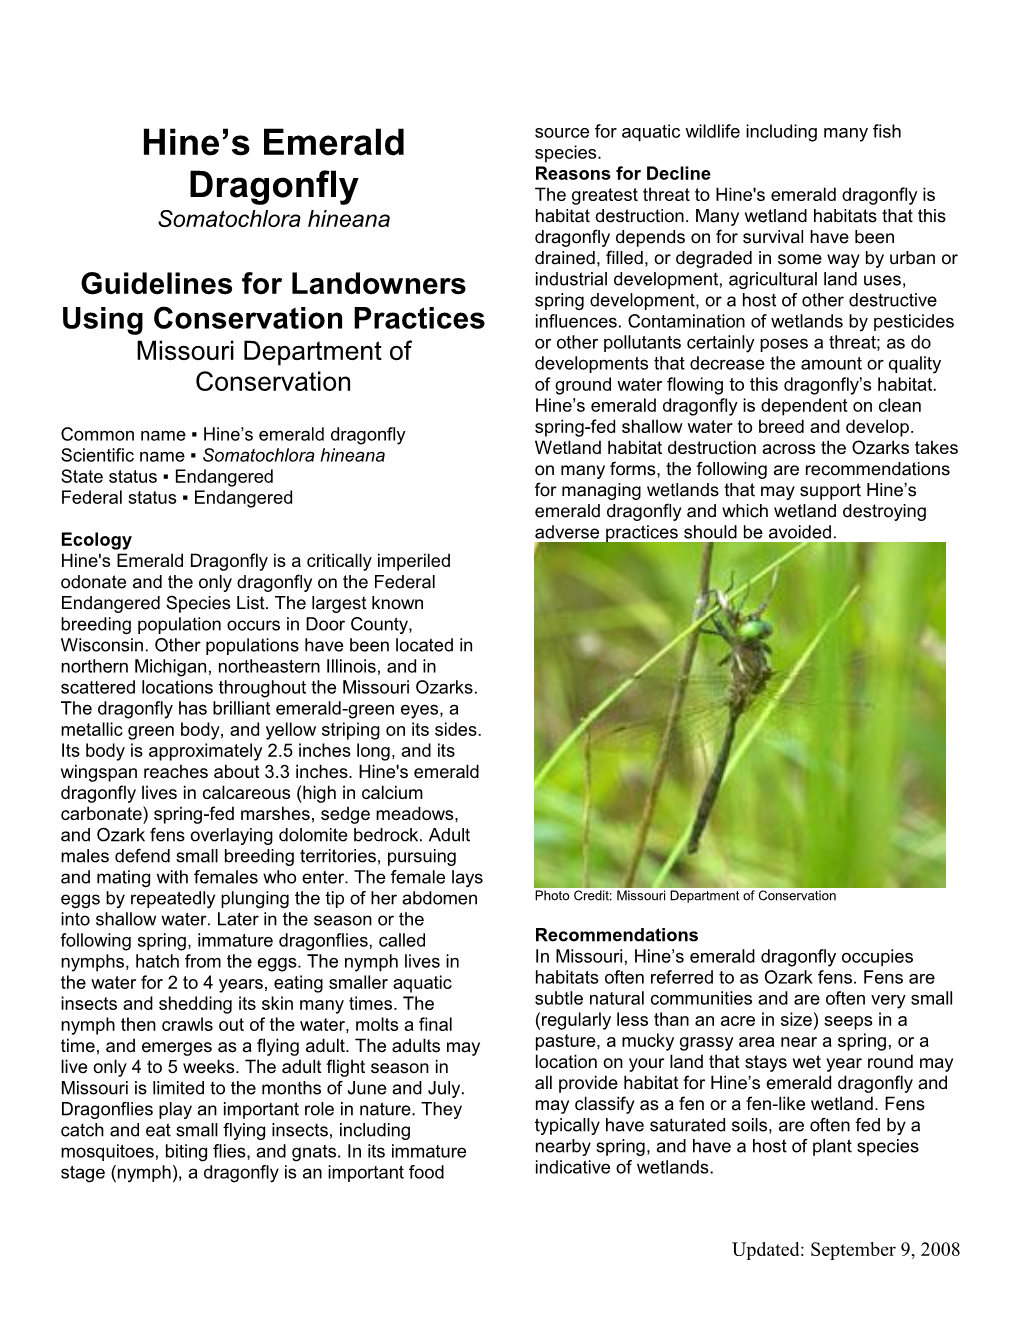 Hine's Emerald Dragonfly Is Somatochlora Hineana Habitat Destruction